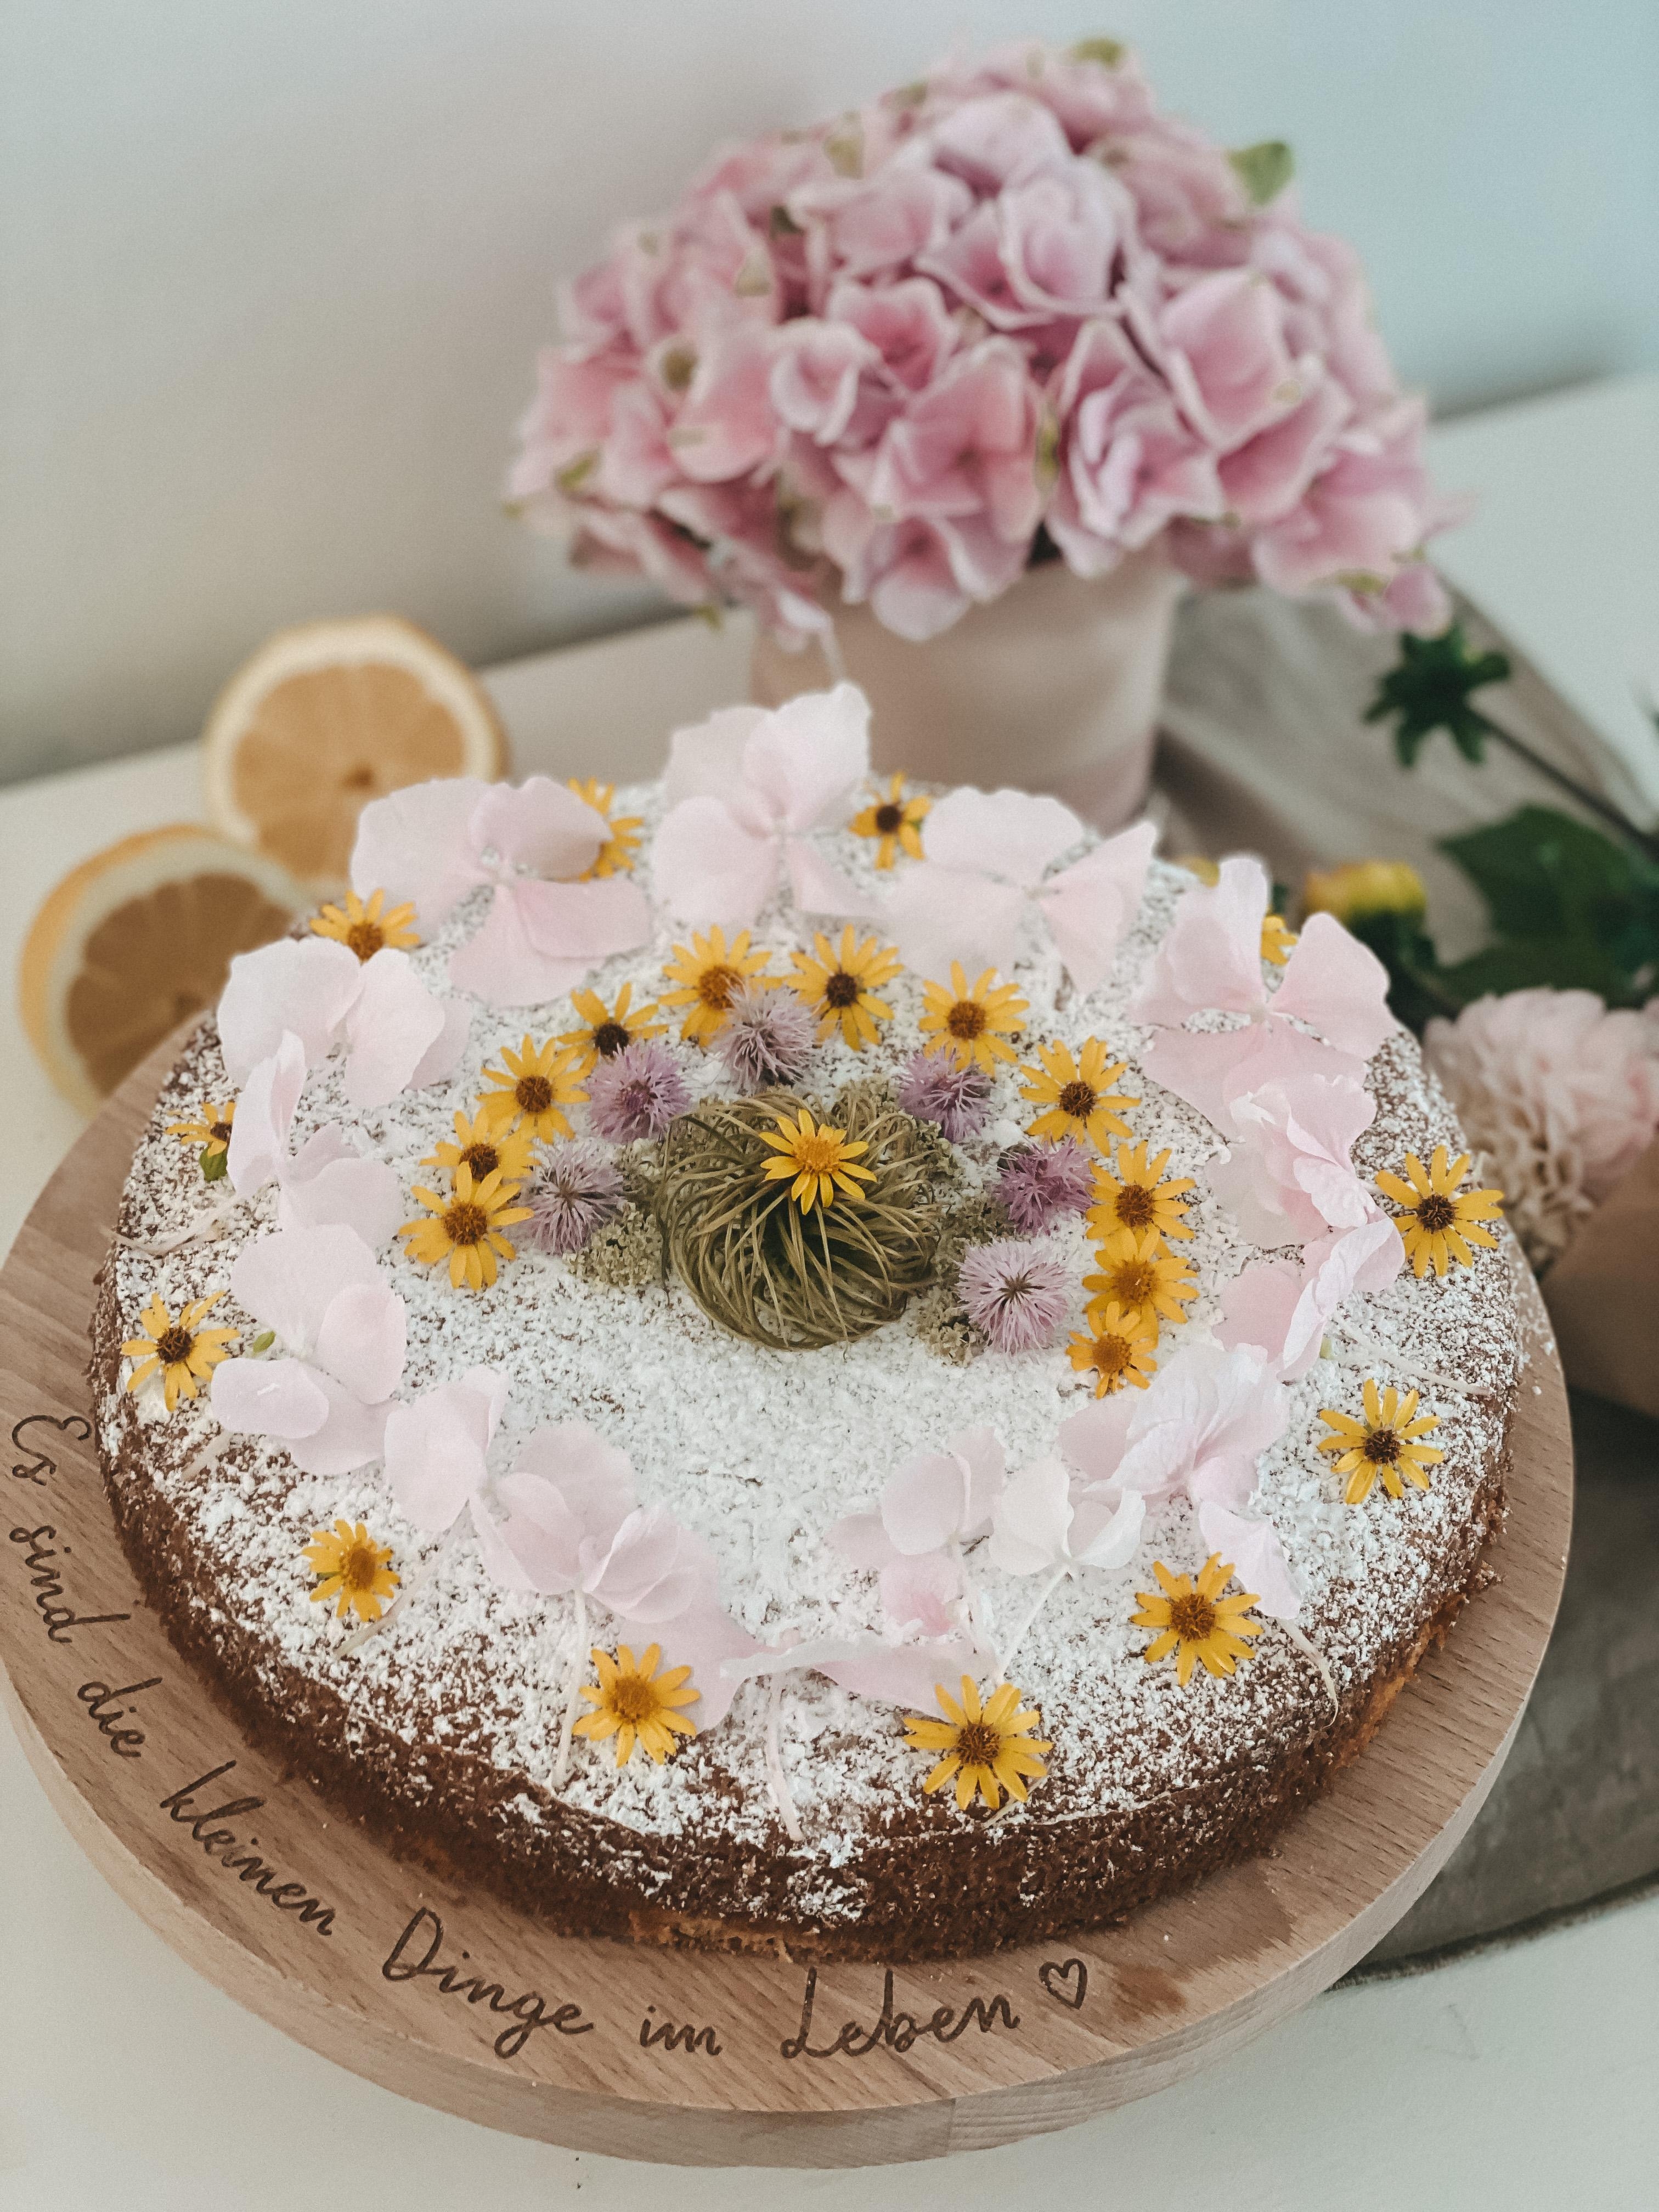 Blütenmandala auf Zitronenkuchen
🌸💛🌸💛
#rezeptidee
#flowerpower
#myfreshflowerfriday
#zitronenkuchen